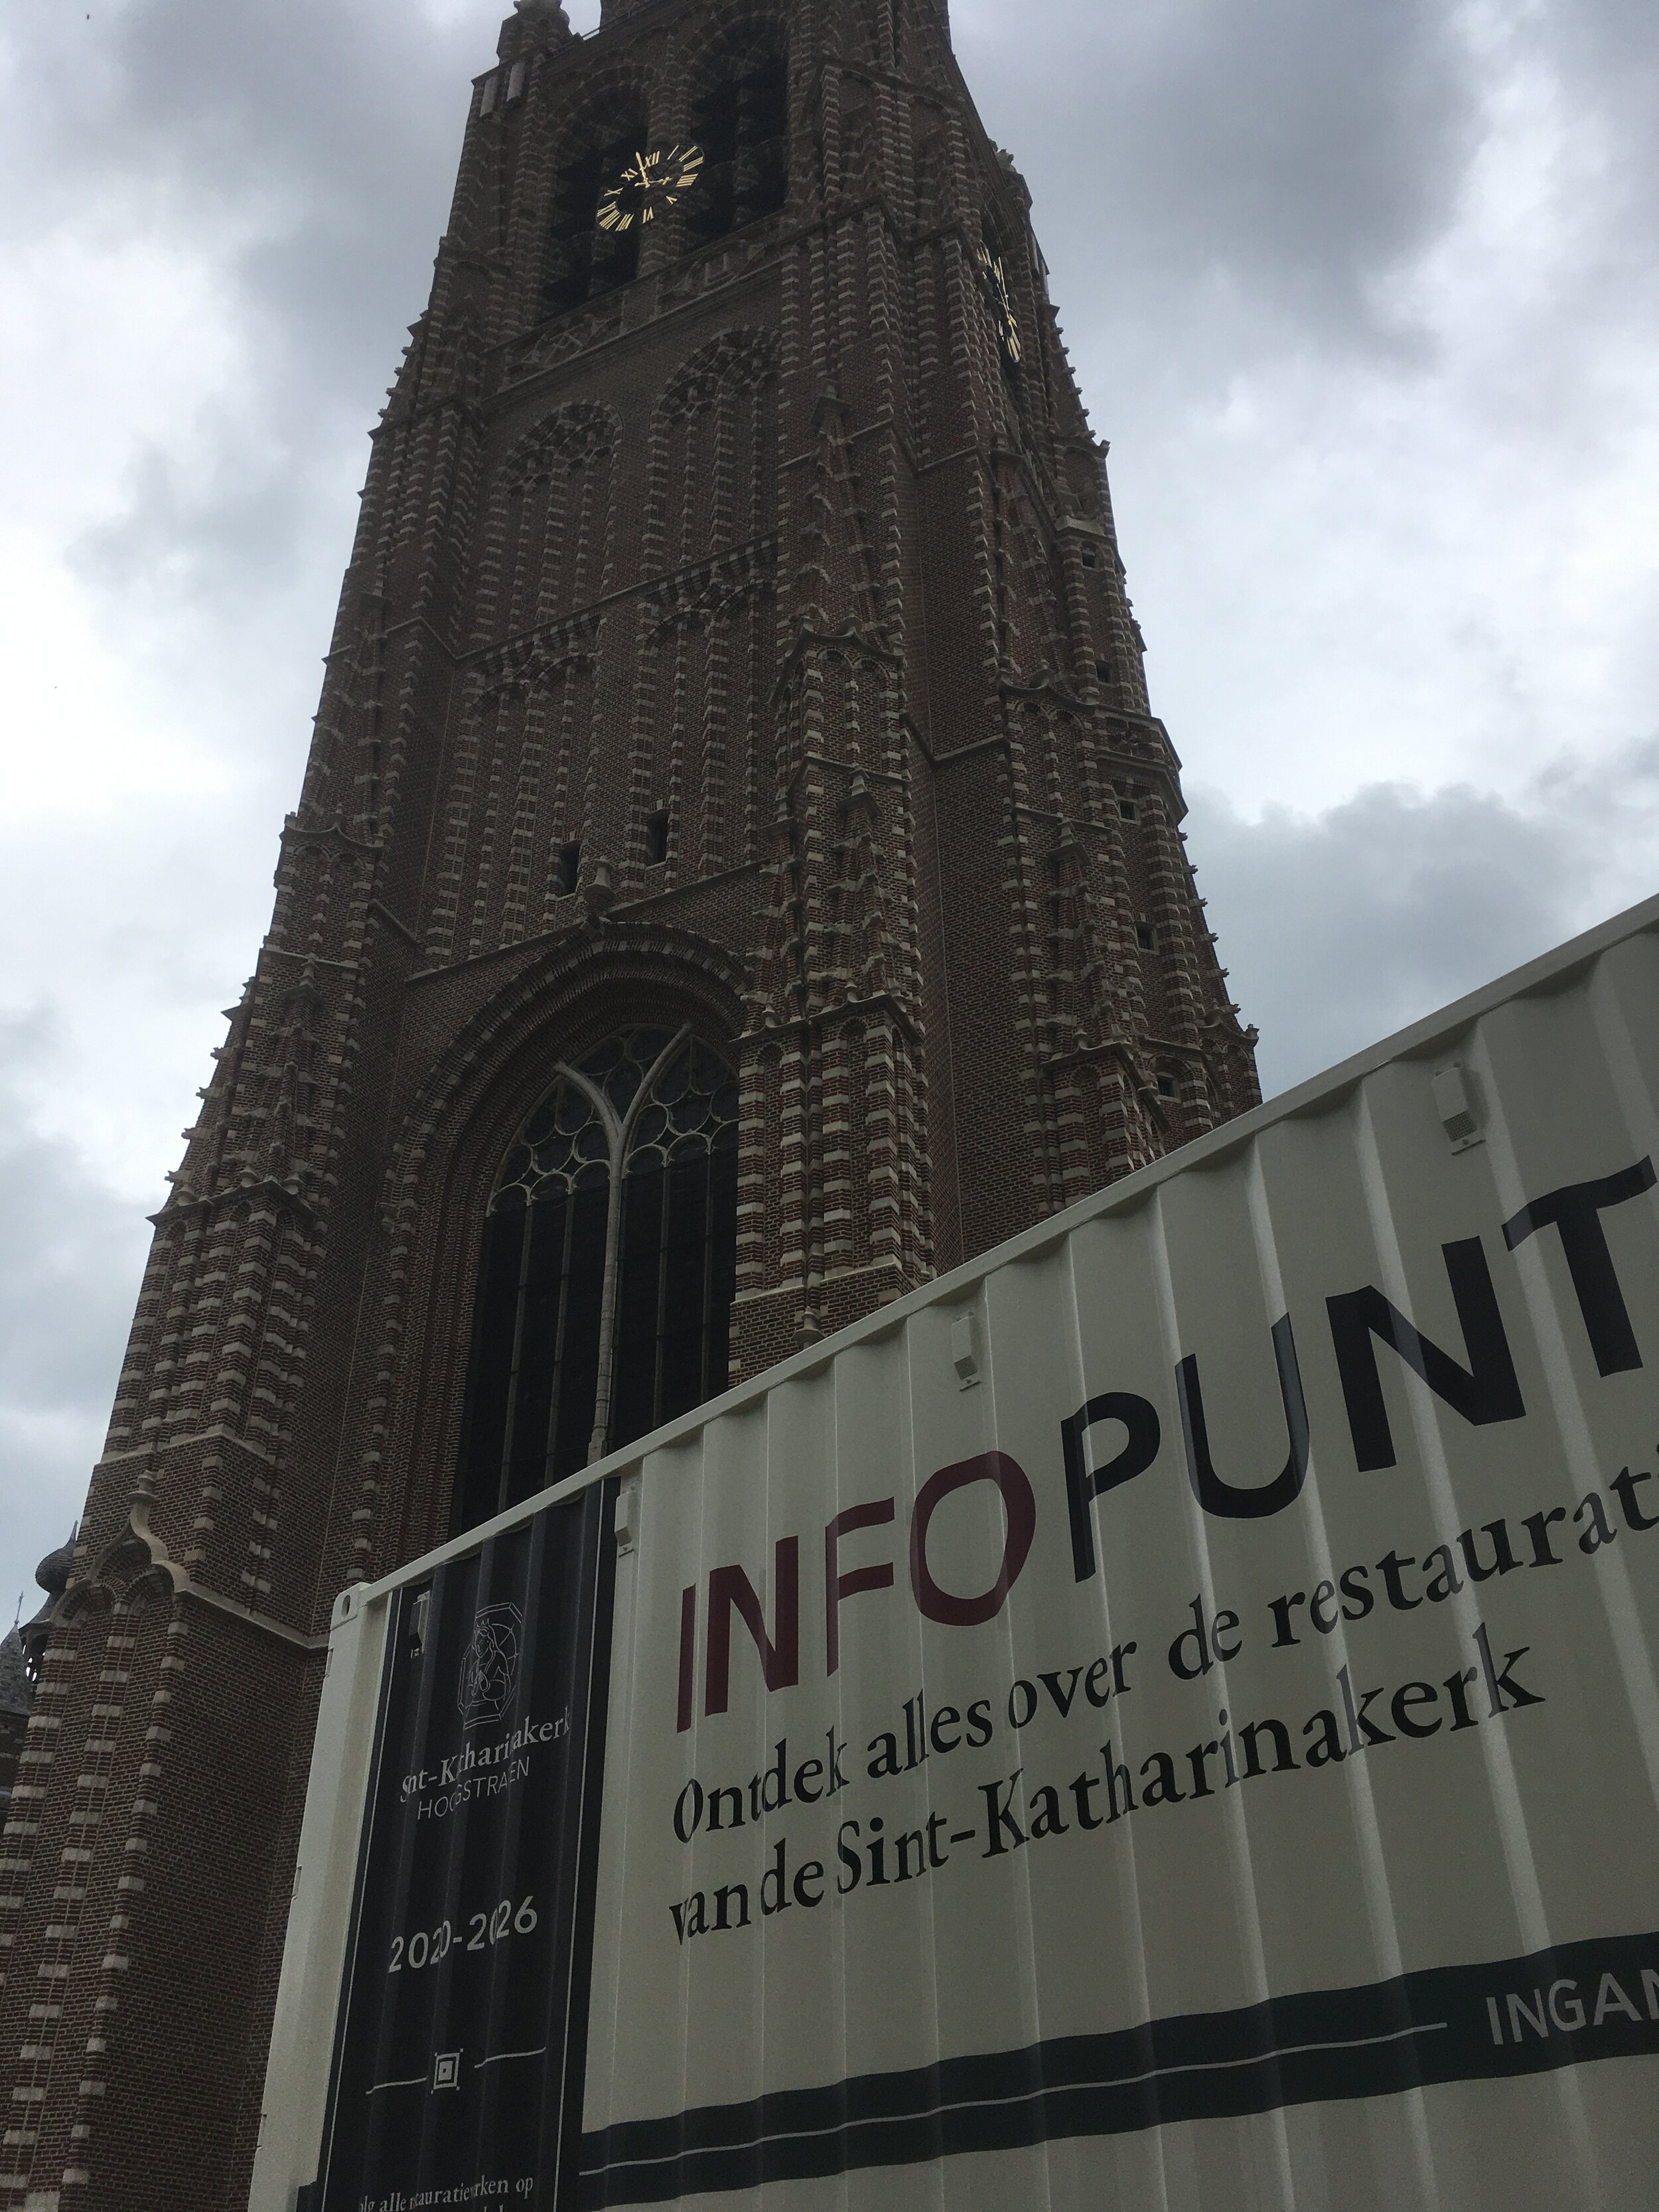 Infopunt St.Catharinakerk